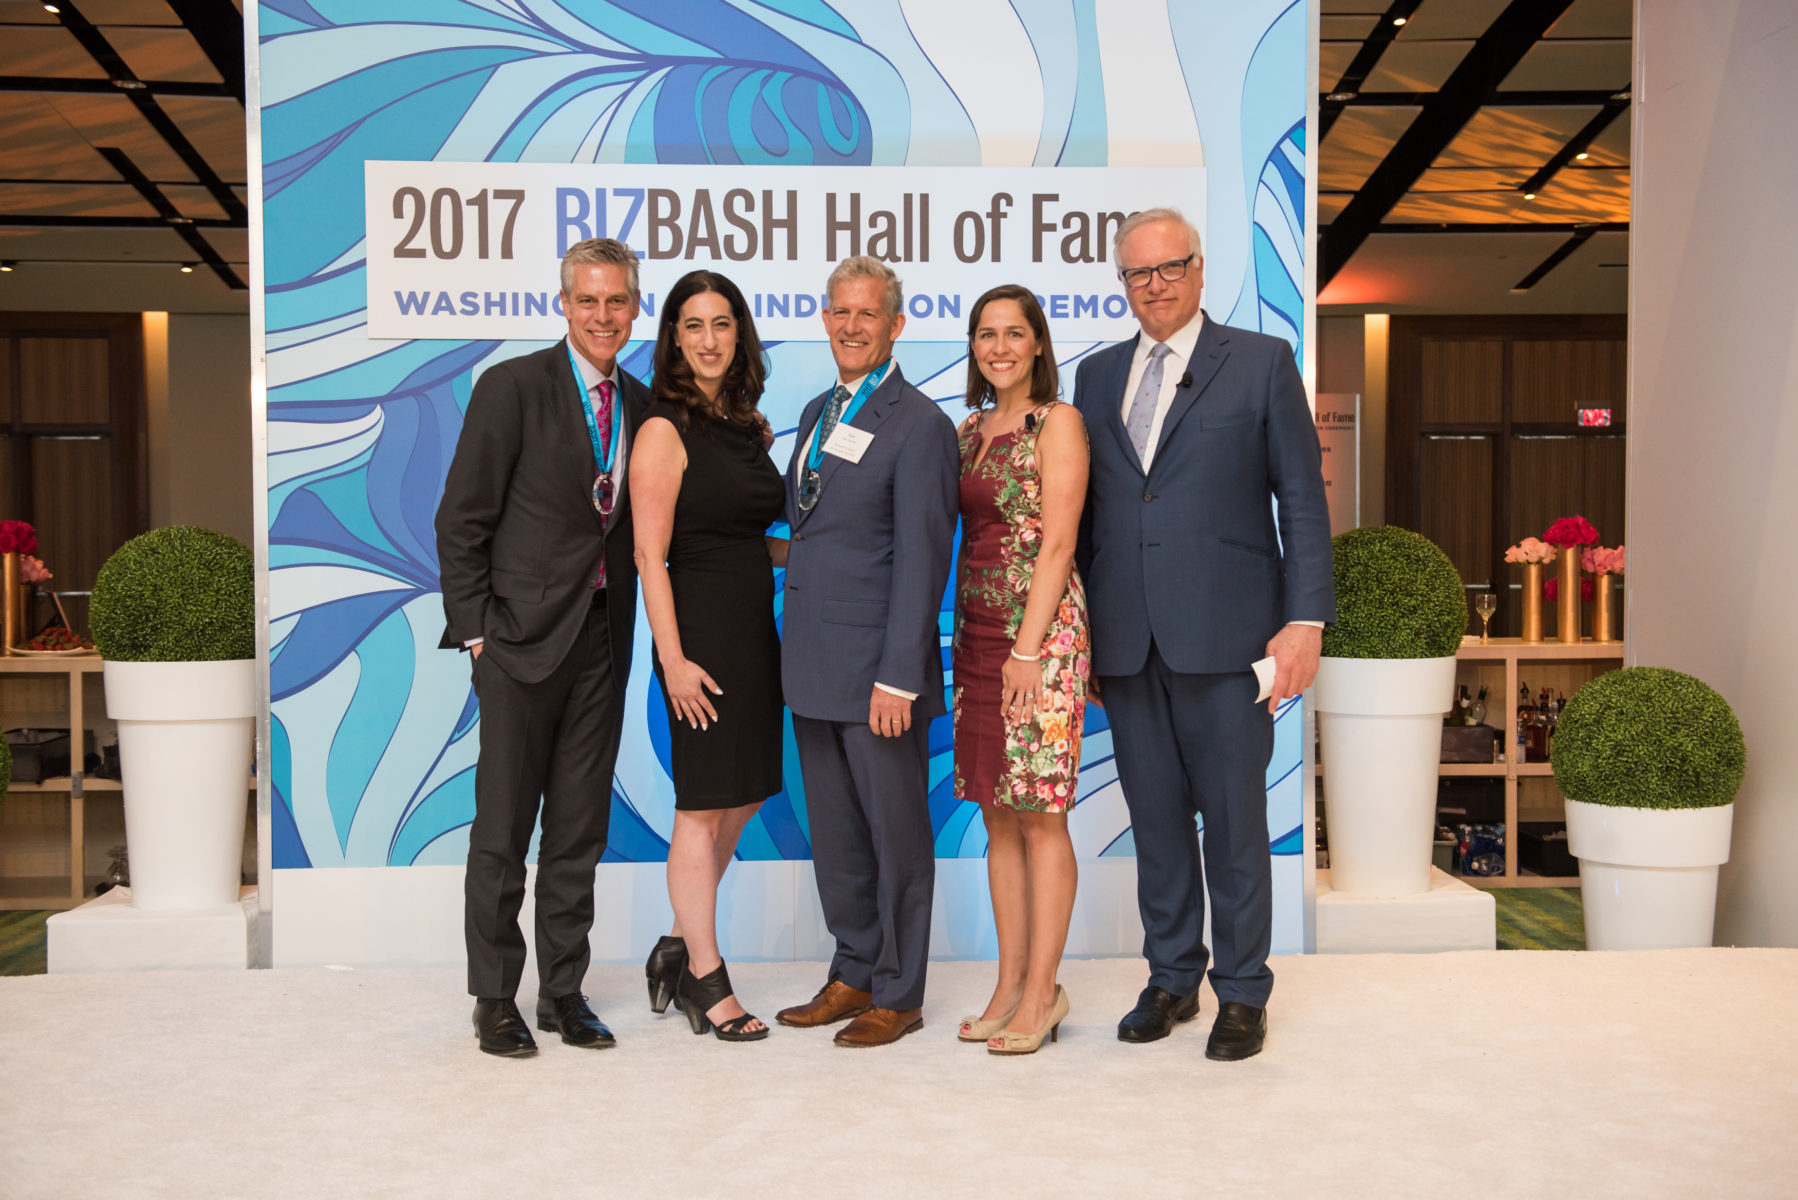 BizBash Hall of Fame Induction Ceremony